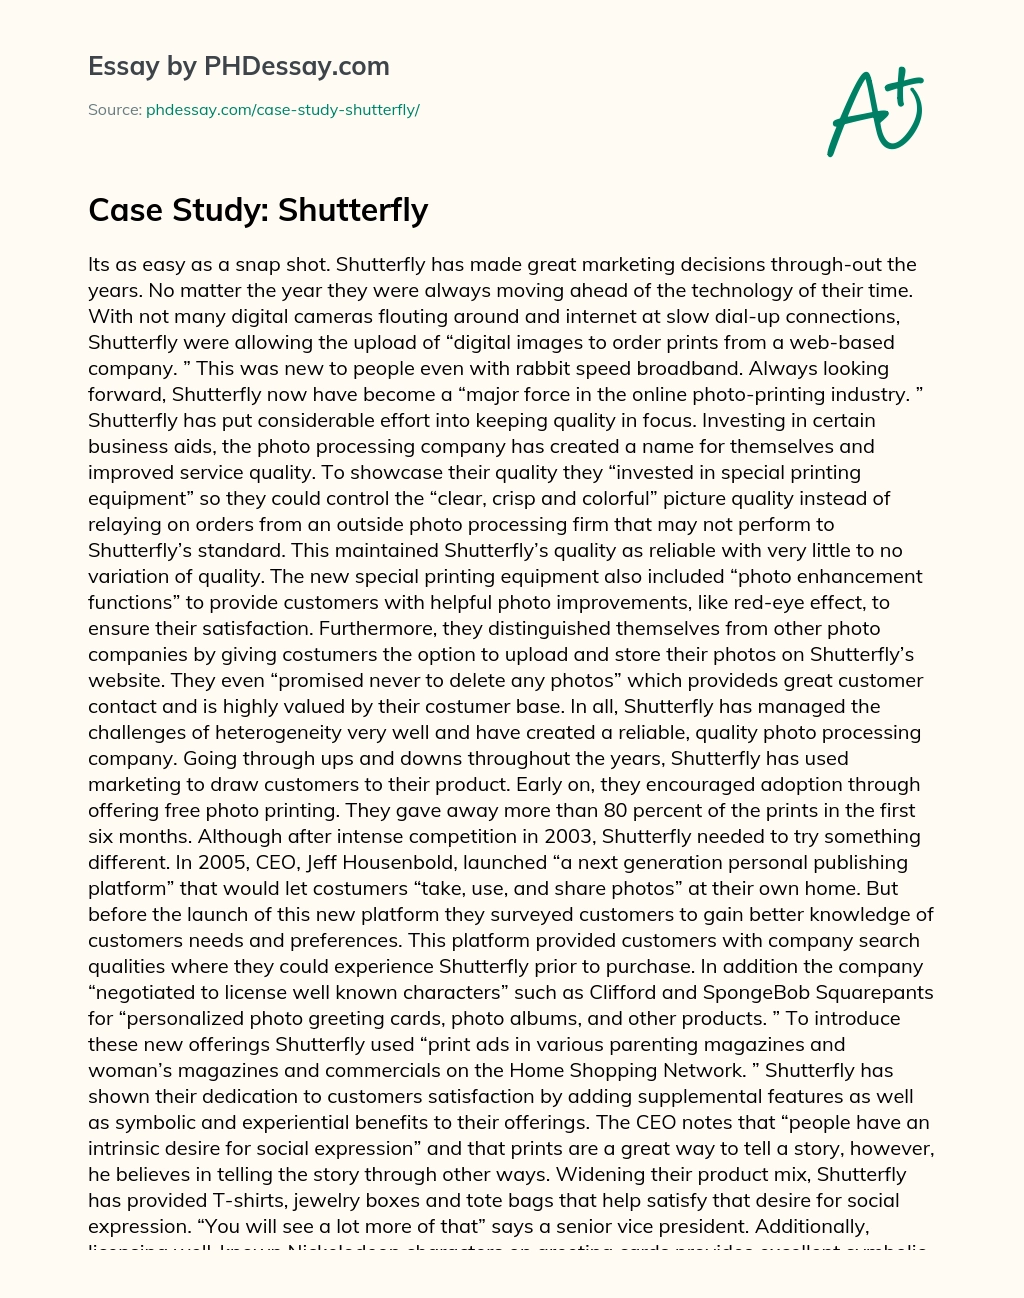 Case Study: Shutterfly essay